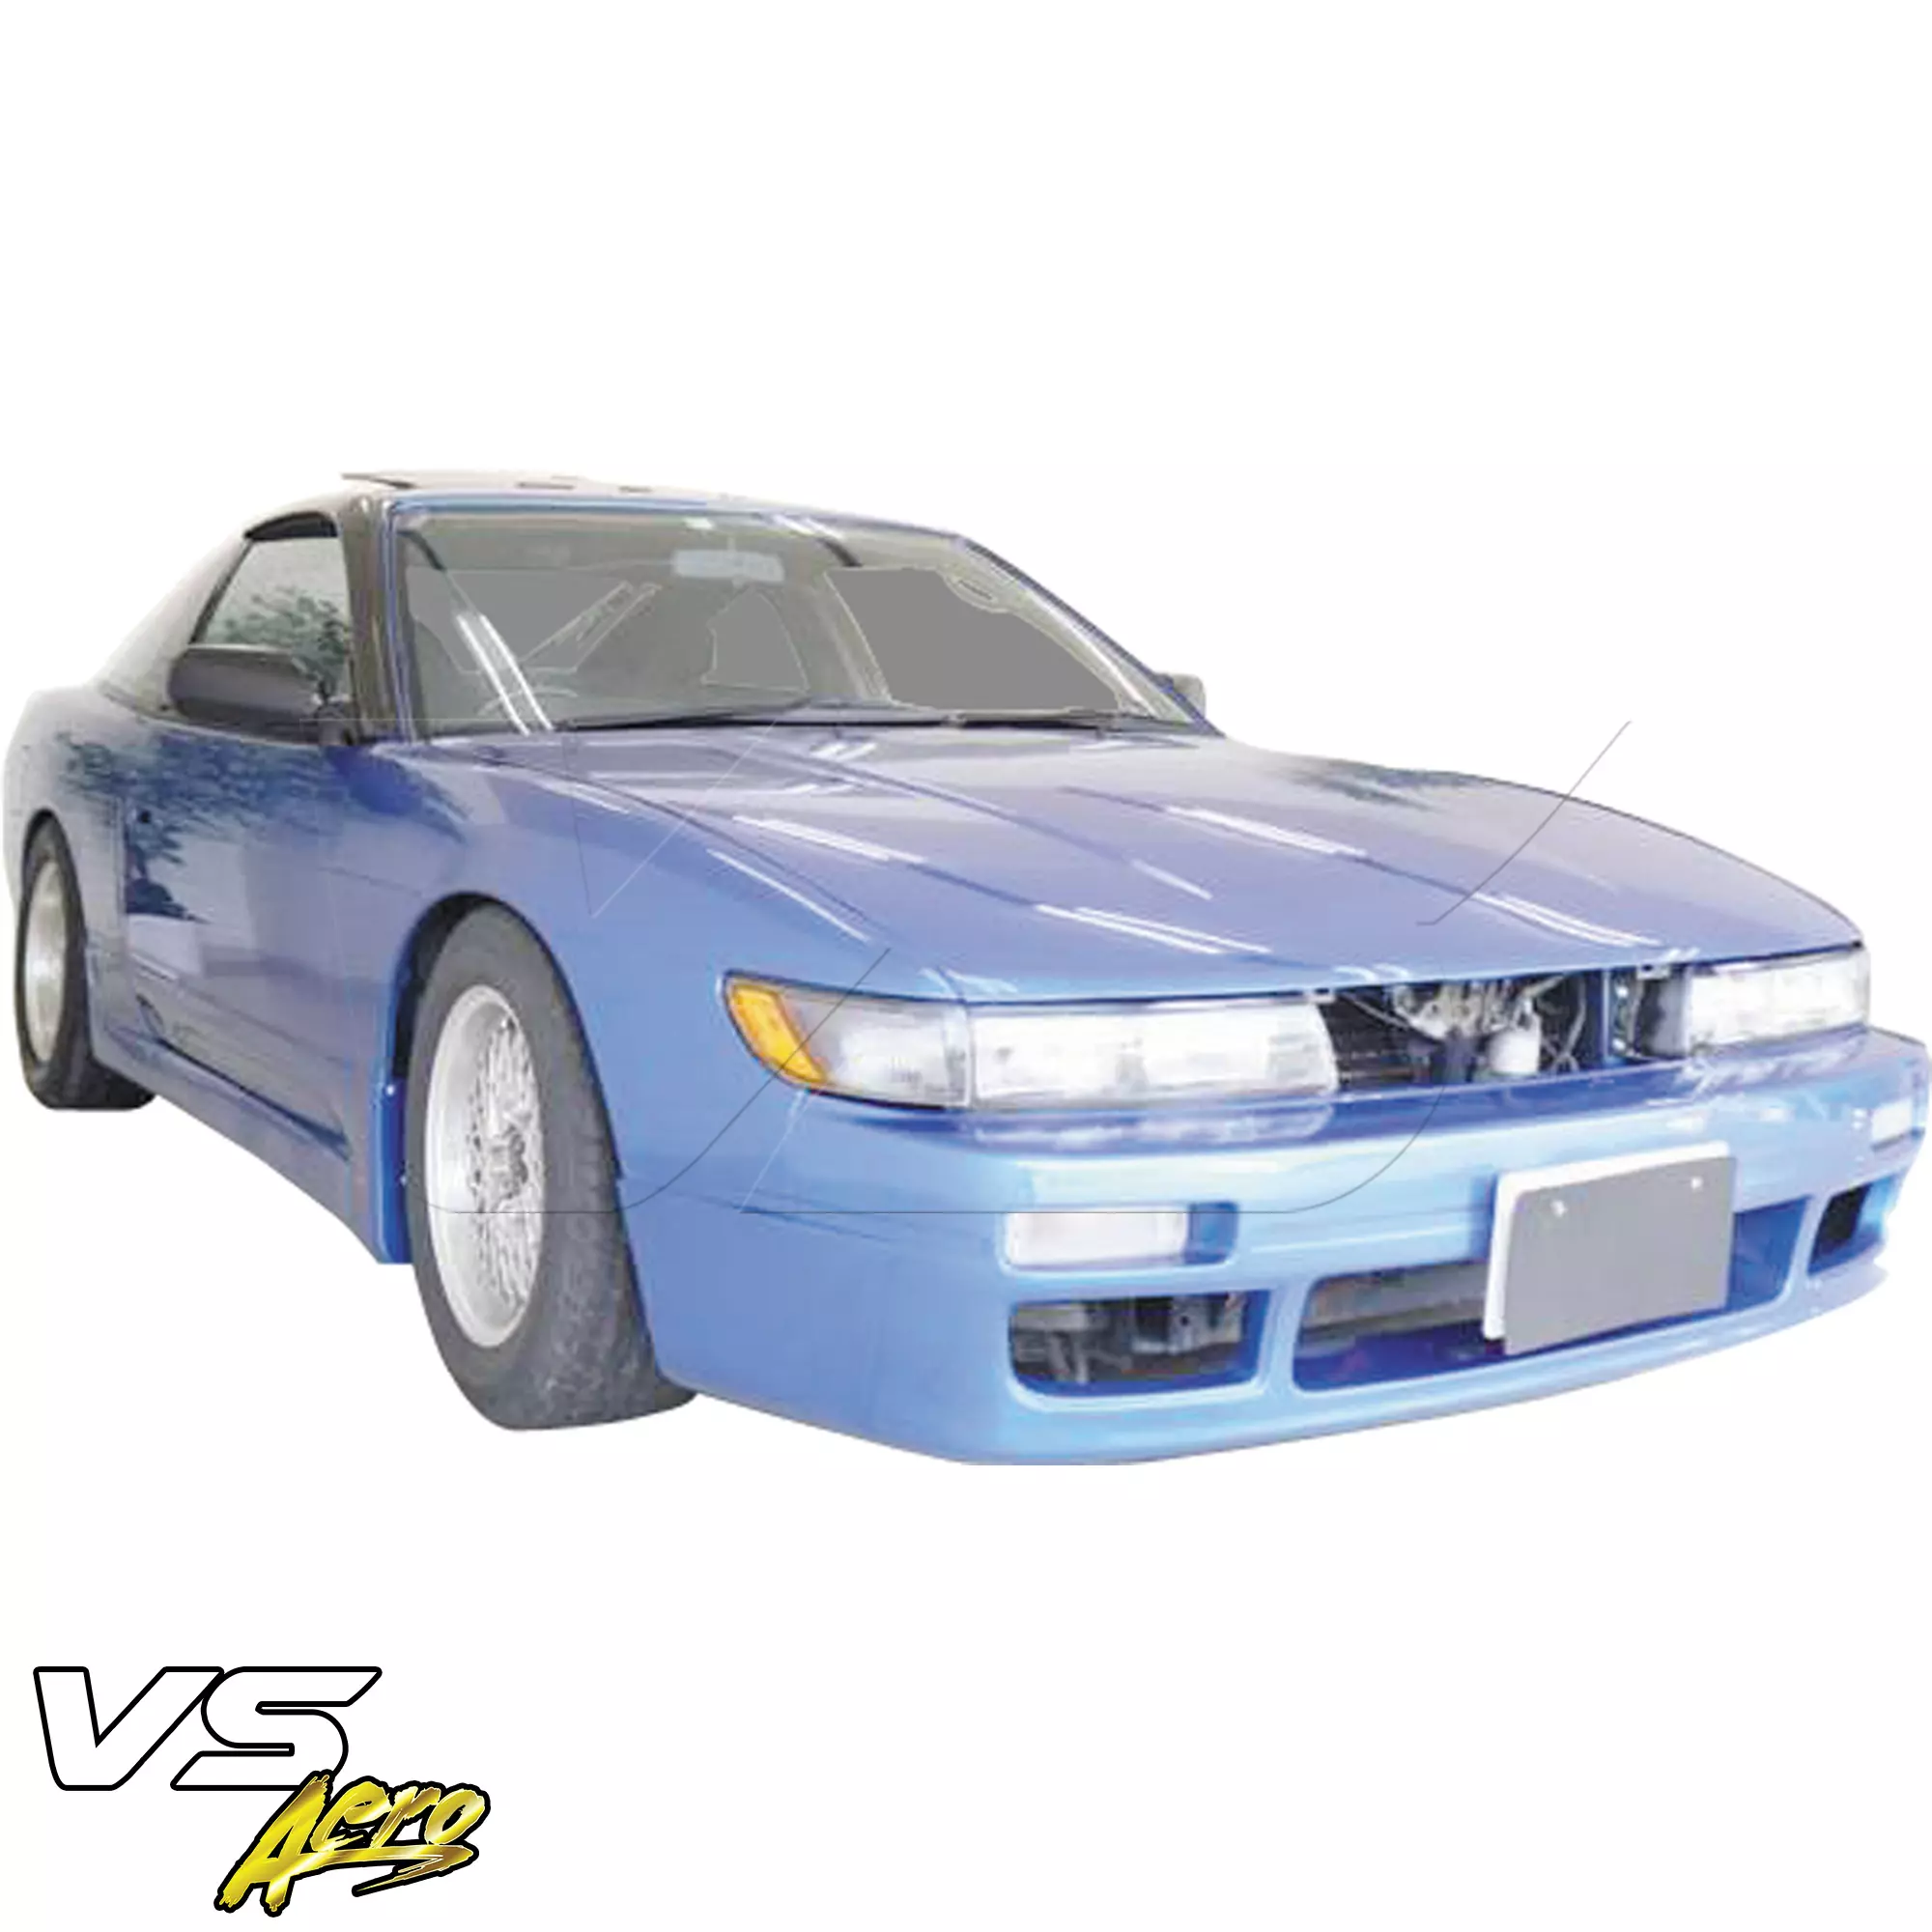 VSaero Urethane AERO Front Bumper > Nissan Silvia S13 1989-1994 - Image 9